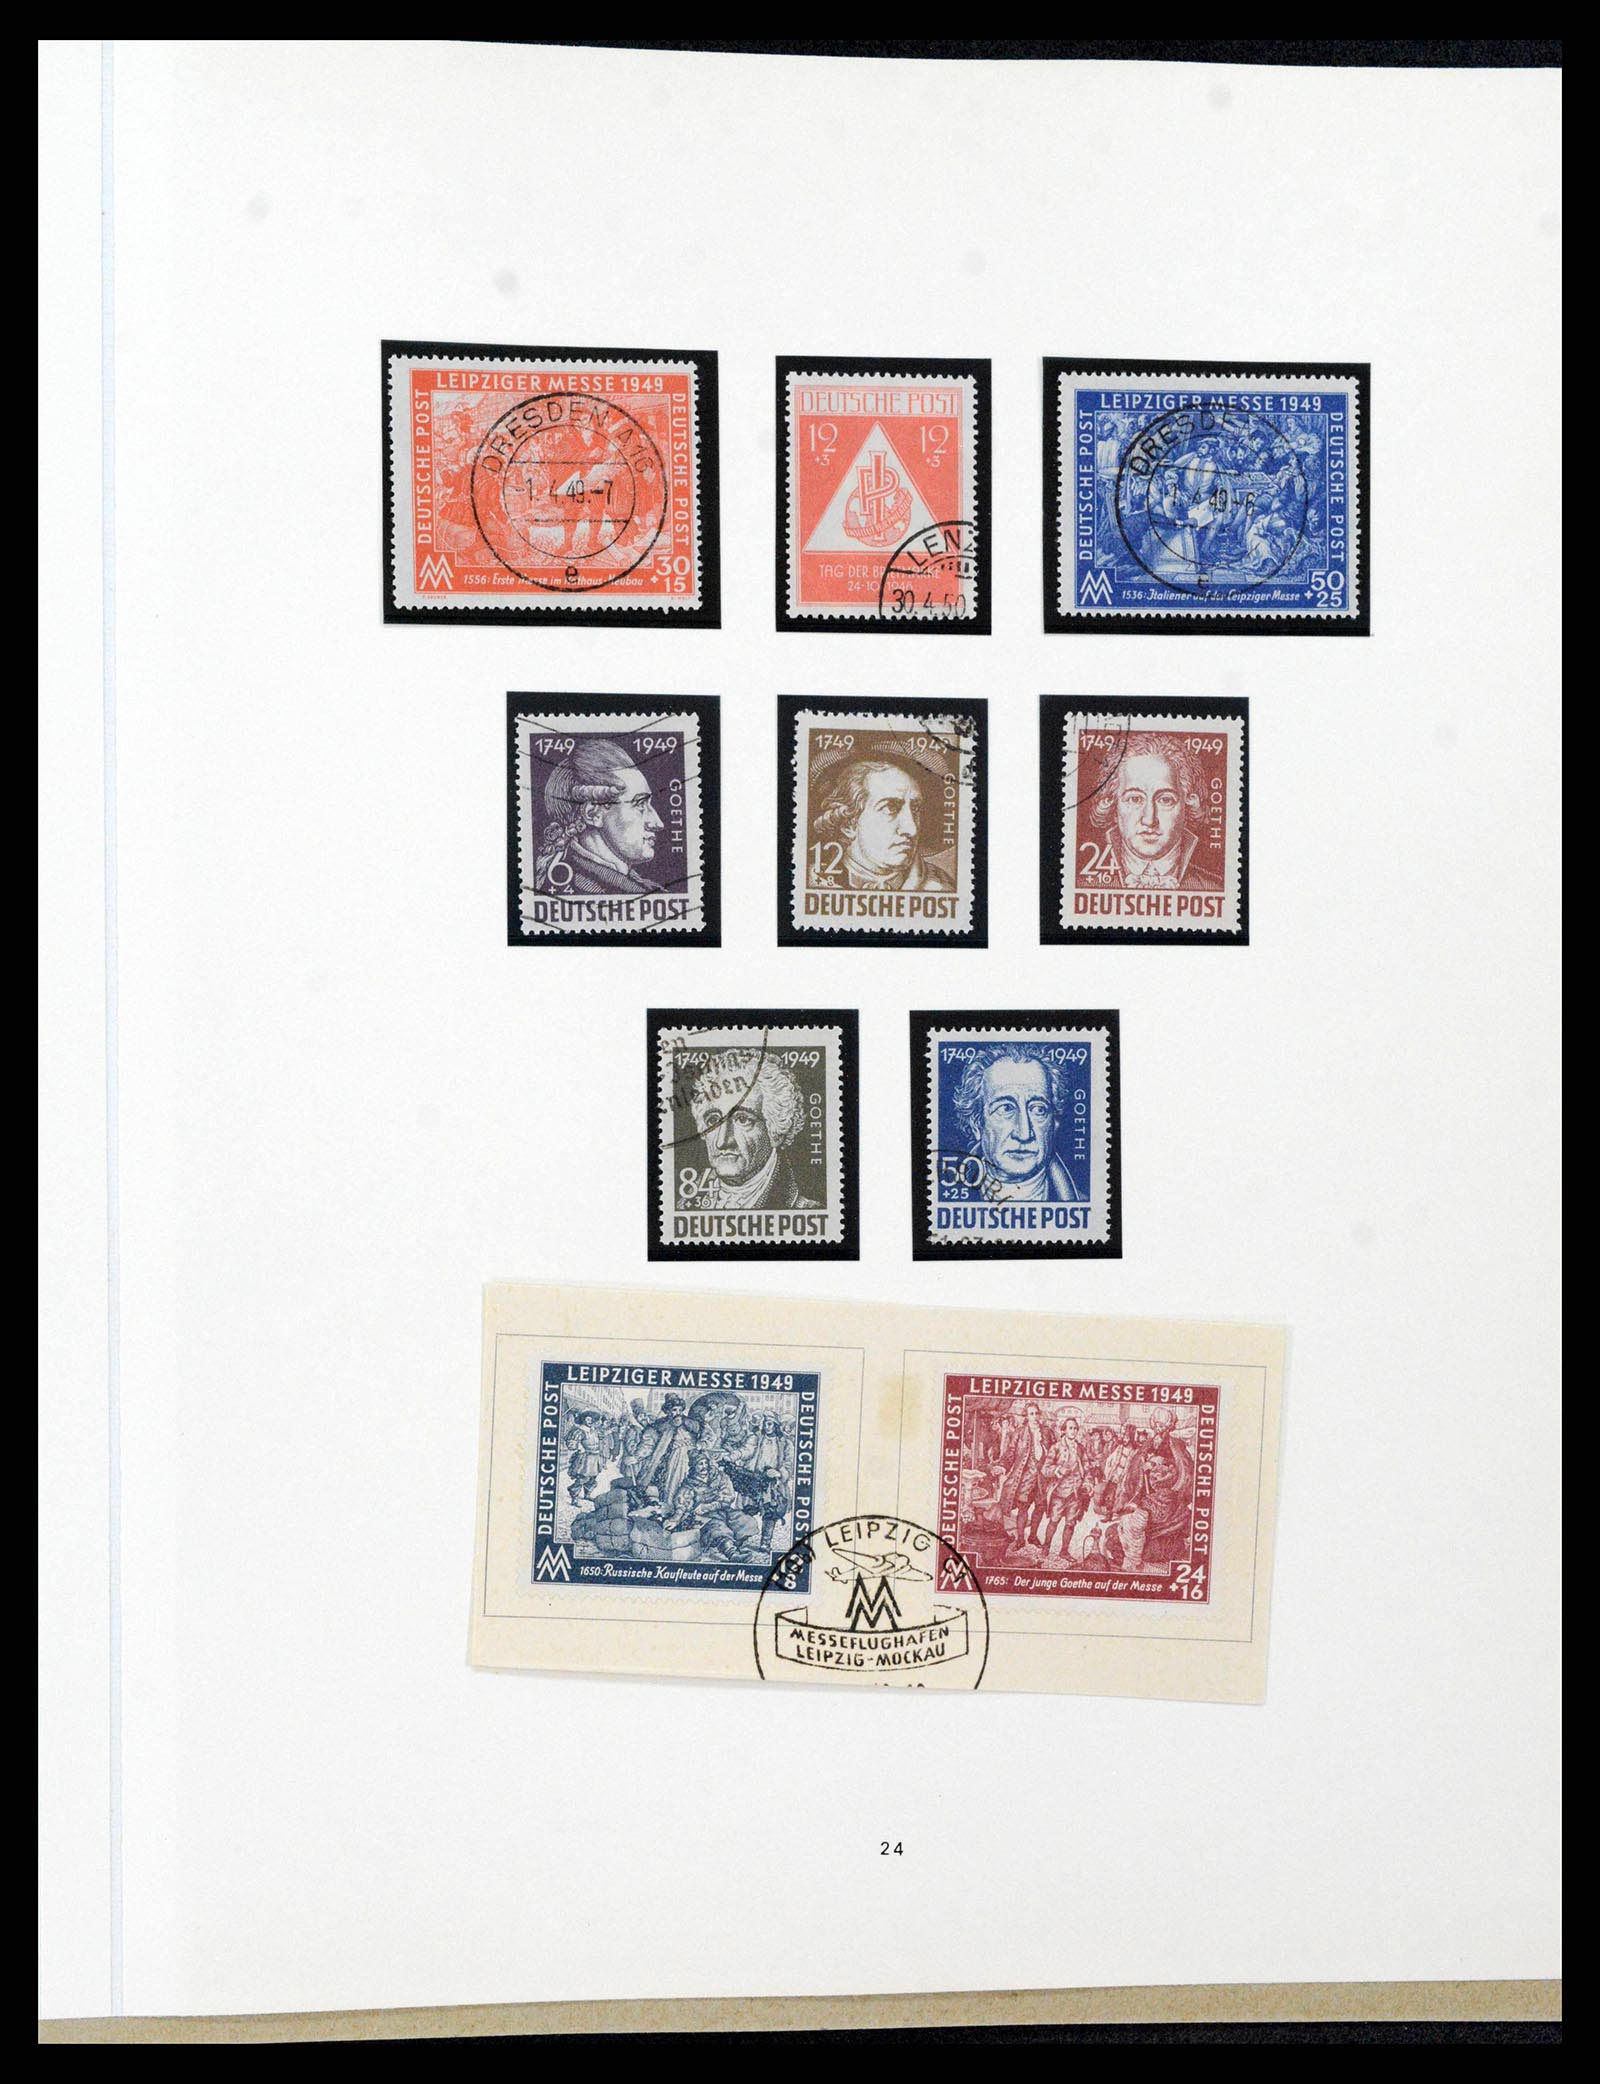 38138 0049 - Stamp collection 38138 German Zones 1945-1949.